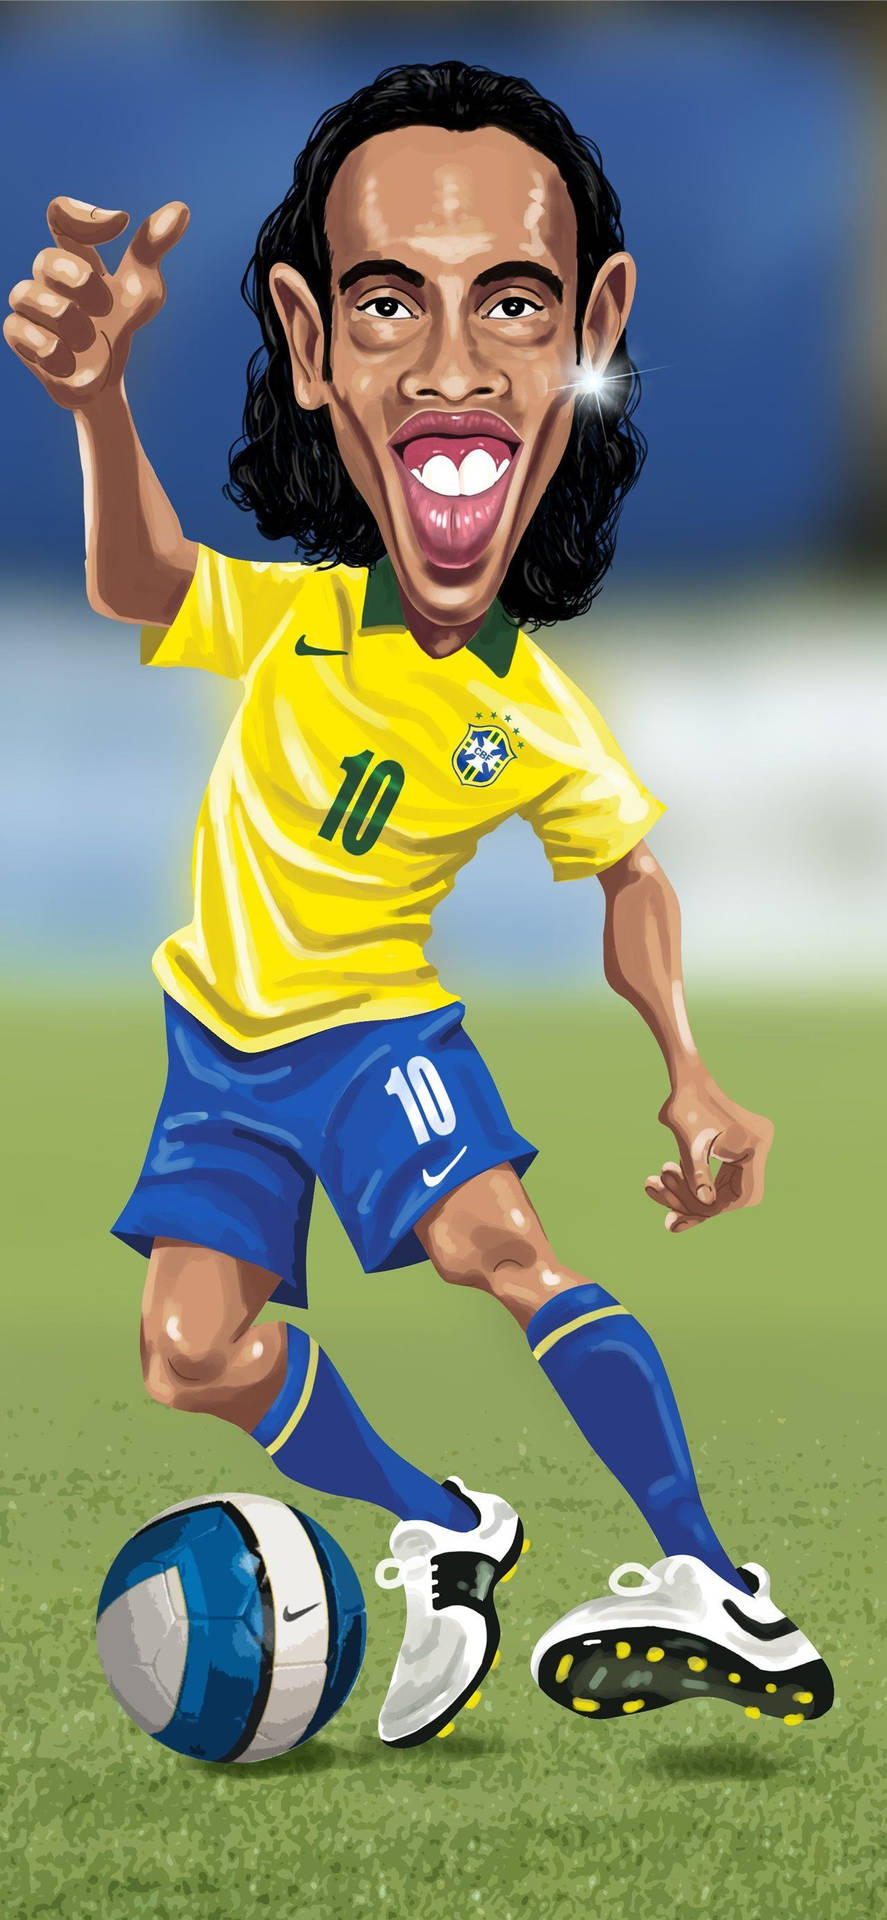 Funny Ronaldinho Caricature Wallpaper